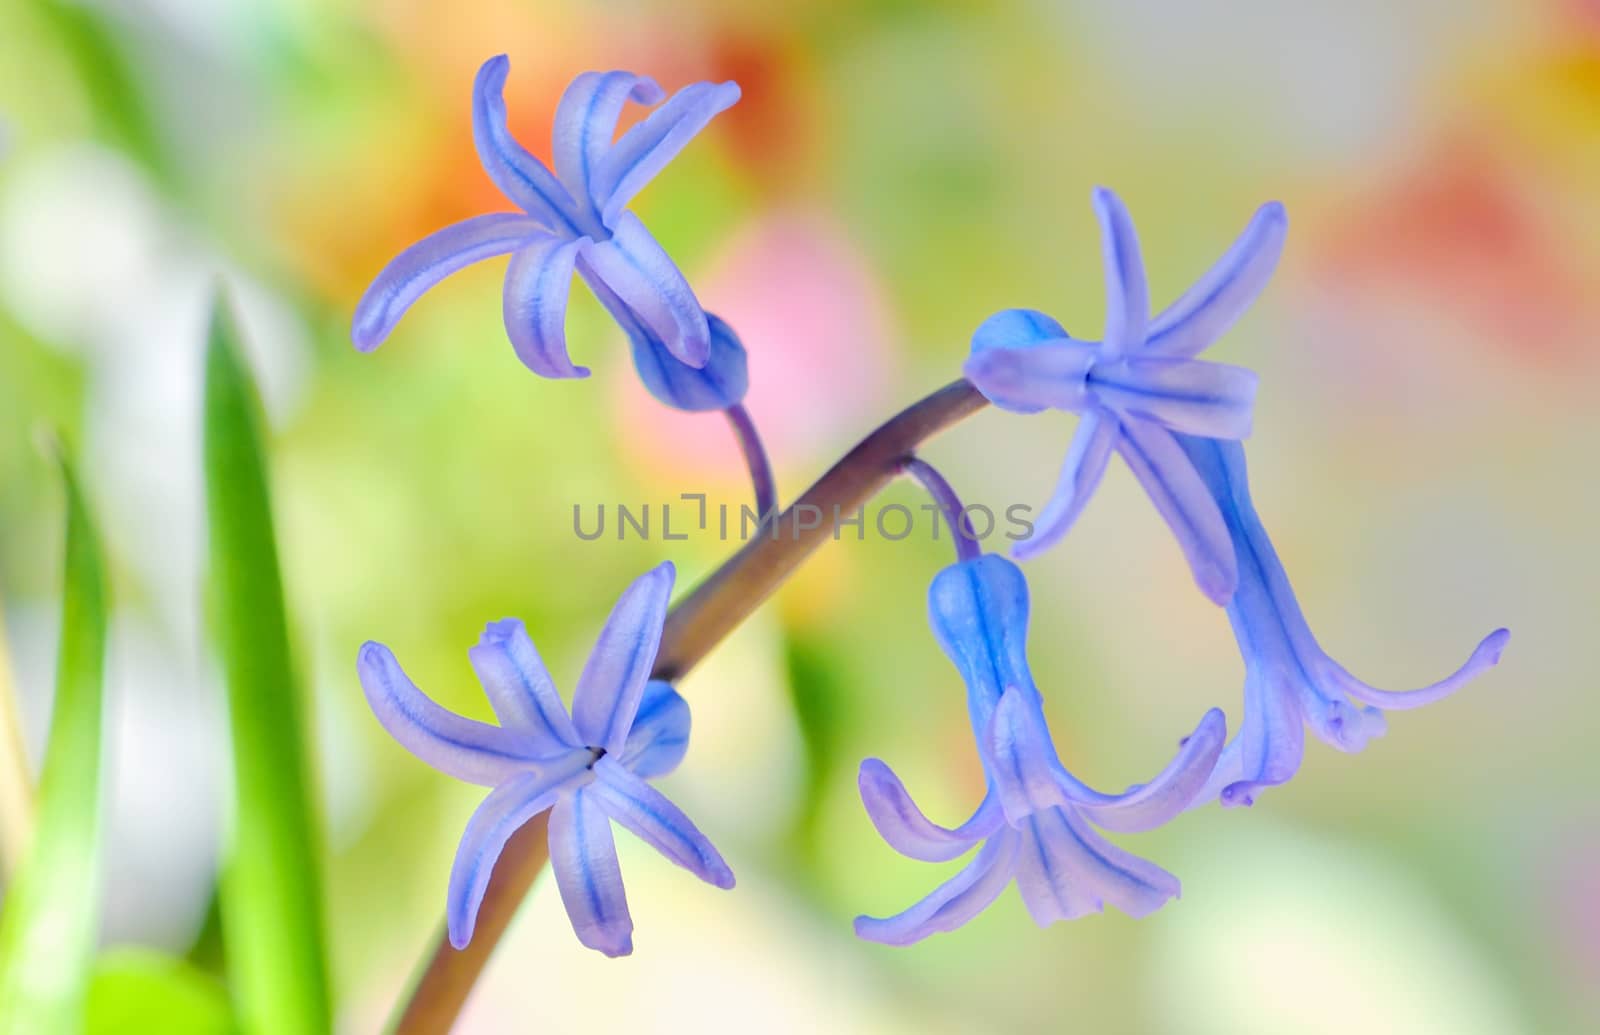 hyacinth flower in the garden